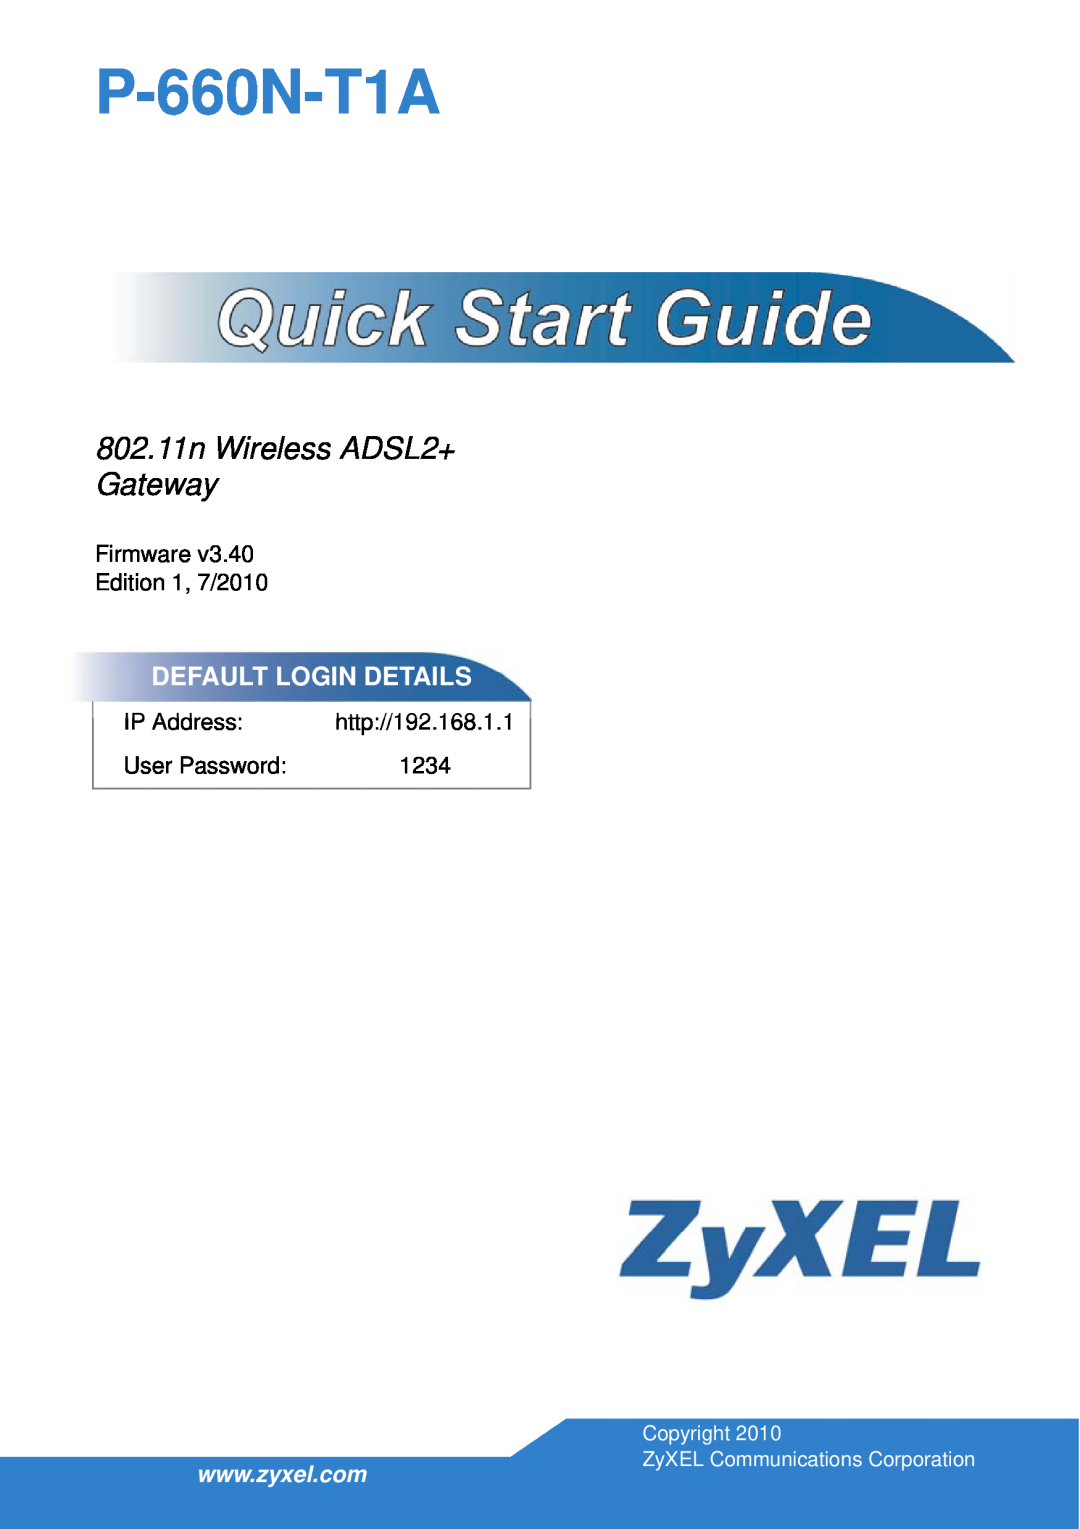 ZyXEL Communications P-660N-T1A manual 802.11n Wireless ADSL2+ Gateway, Default Login Details, Firmware Edition 1, 7/2010 